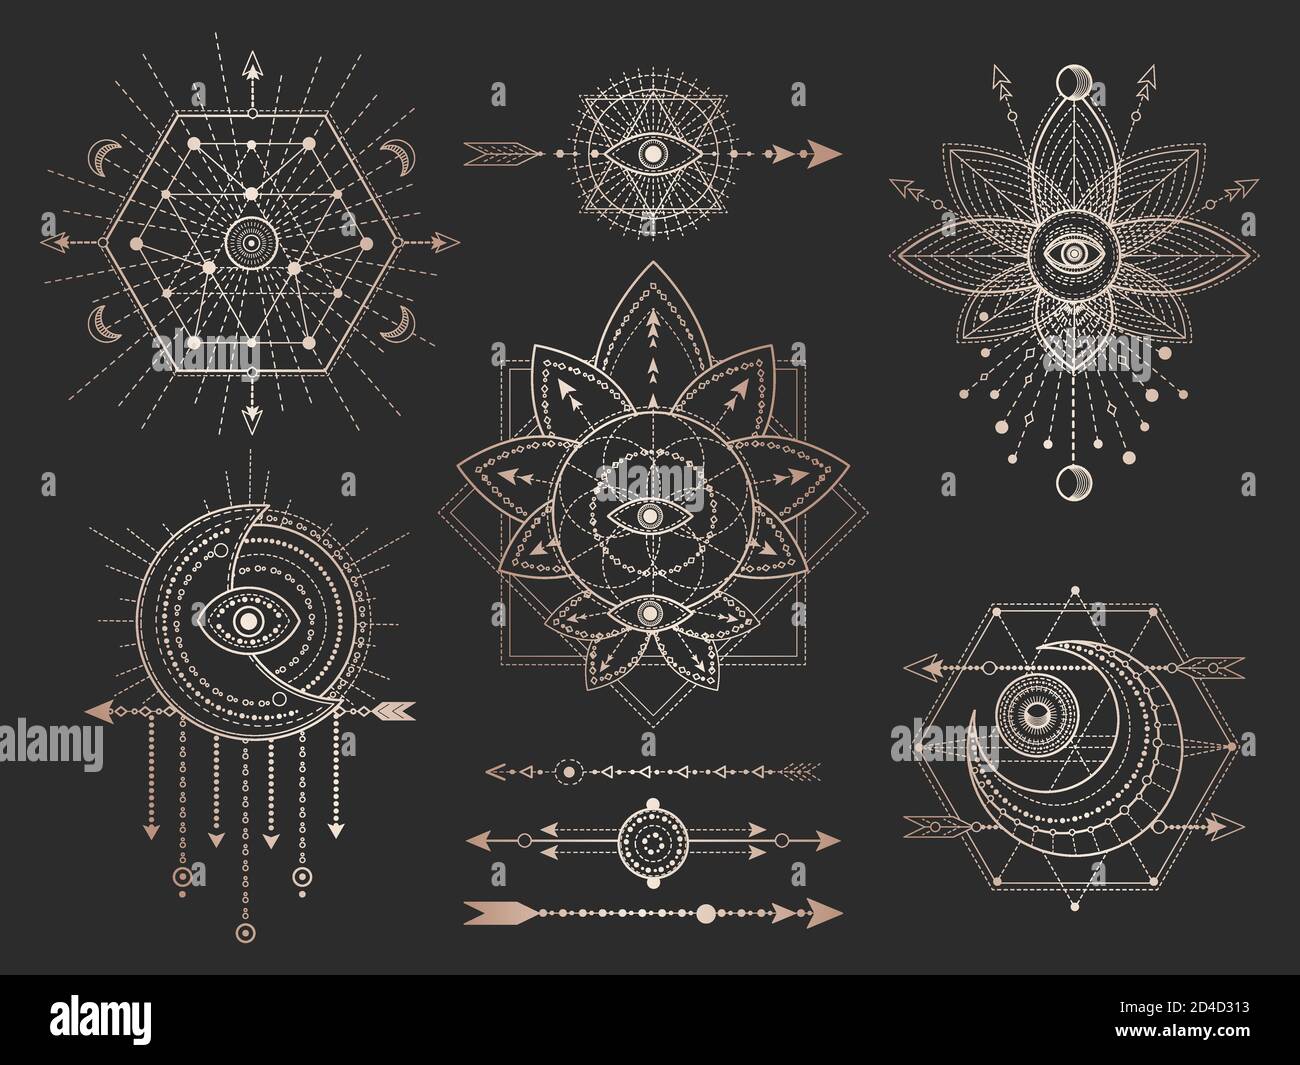 sacred geometry symbols tattoos